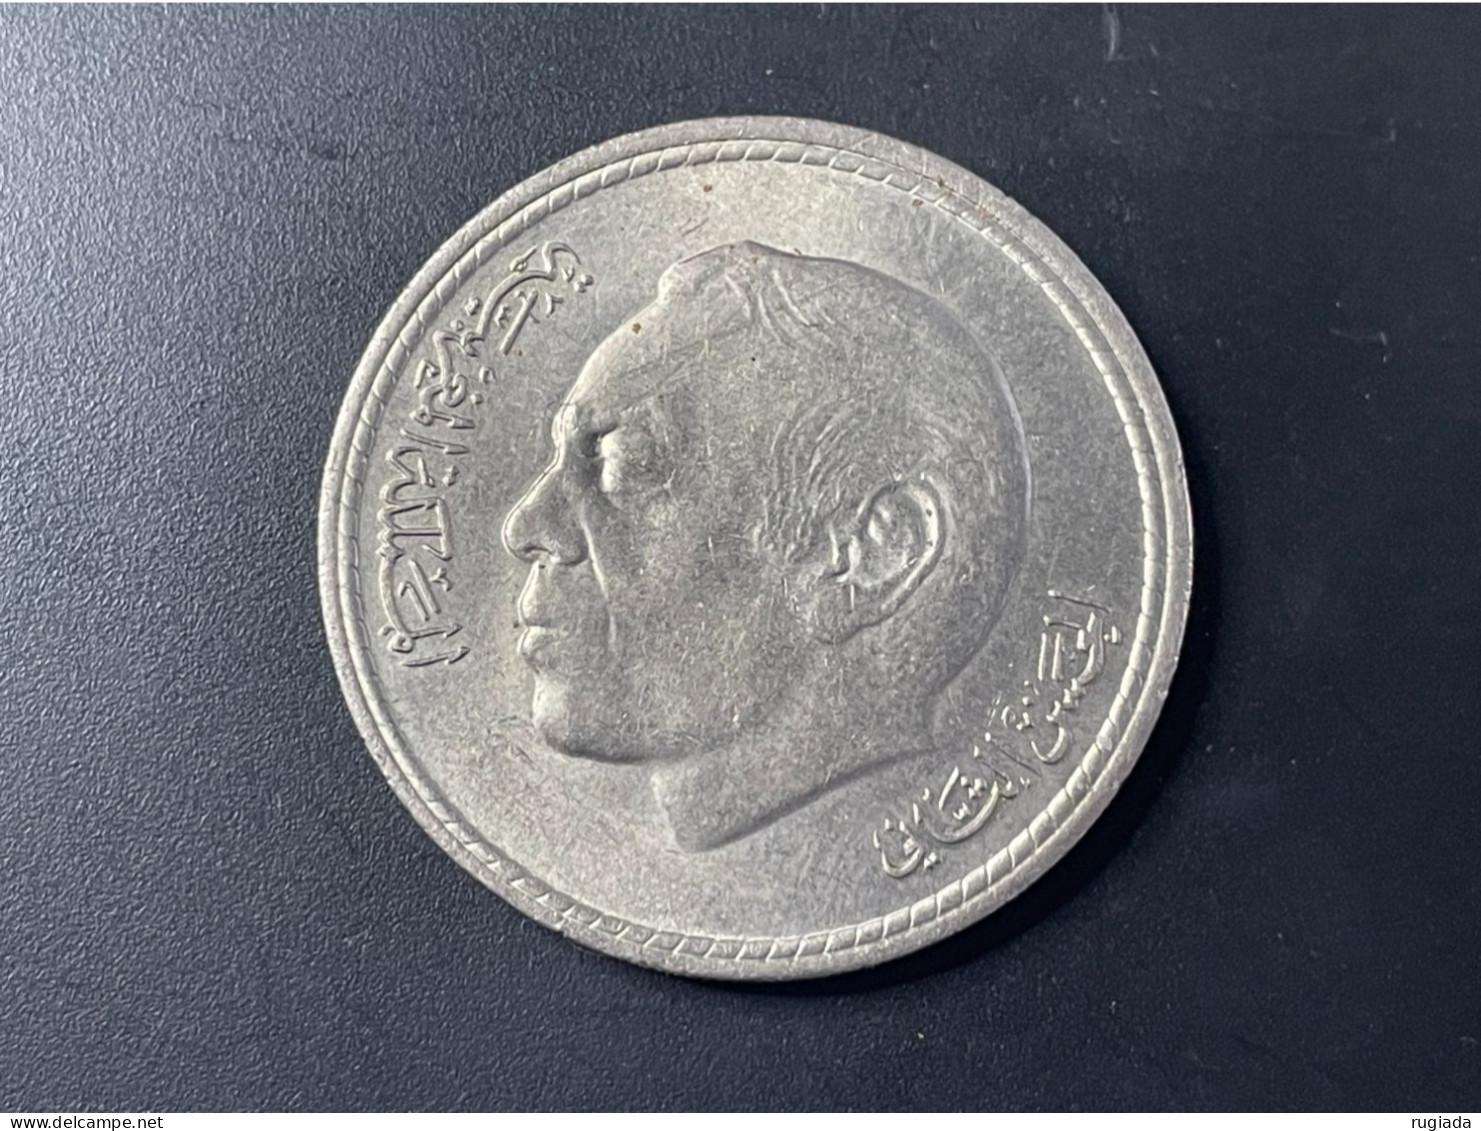 1975 Morocco Commemorative 5 Dirham Coin, AU About Uncirculated - Maroc